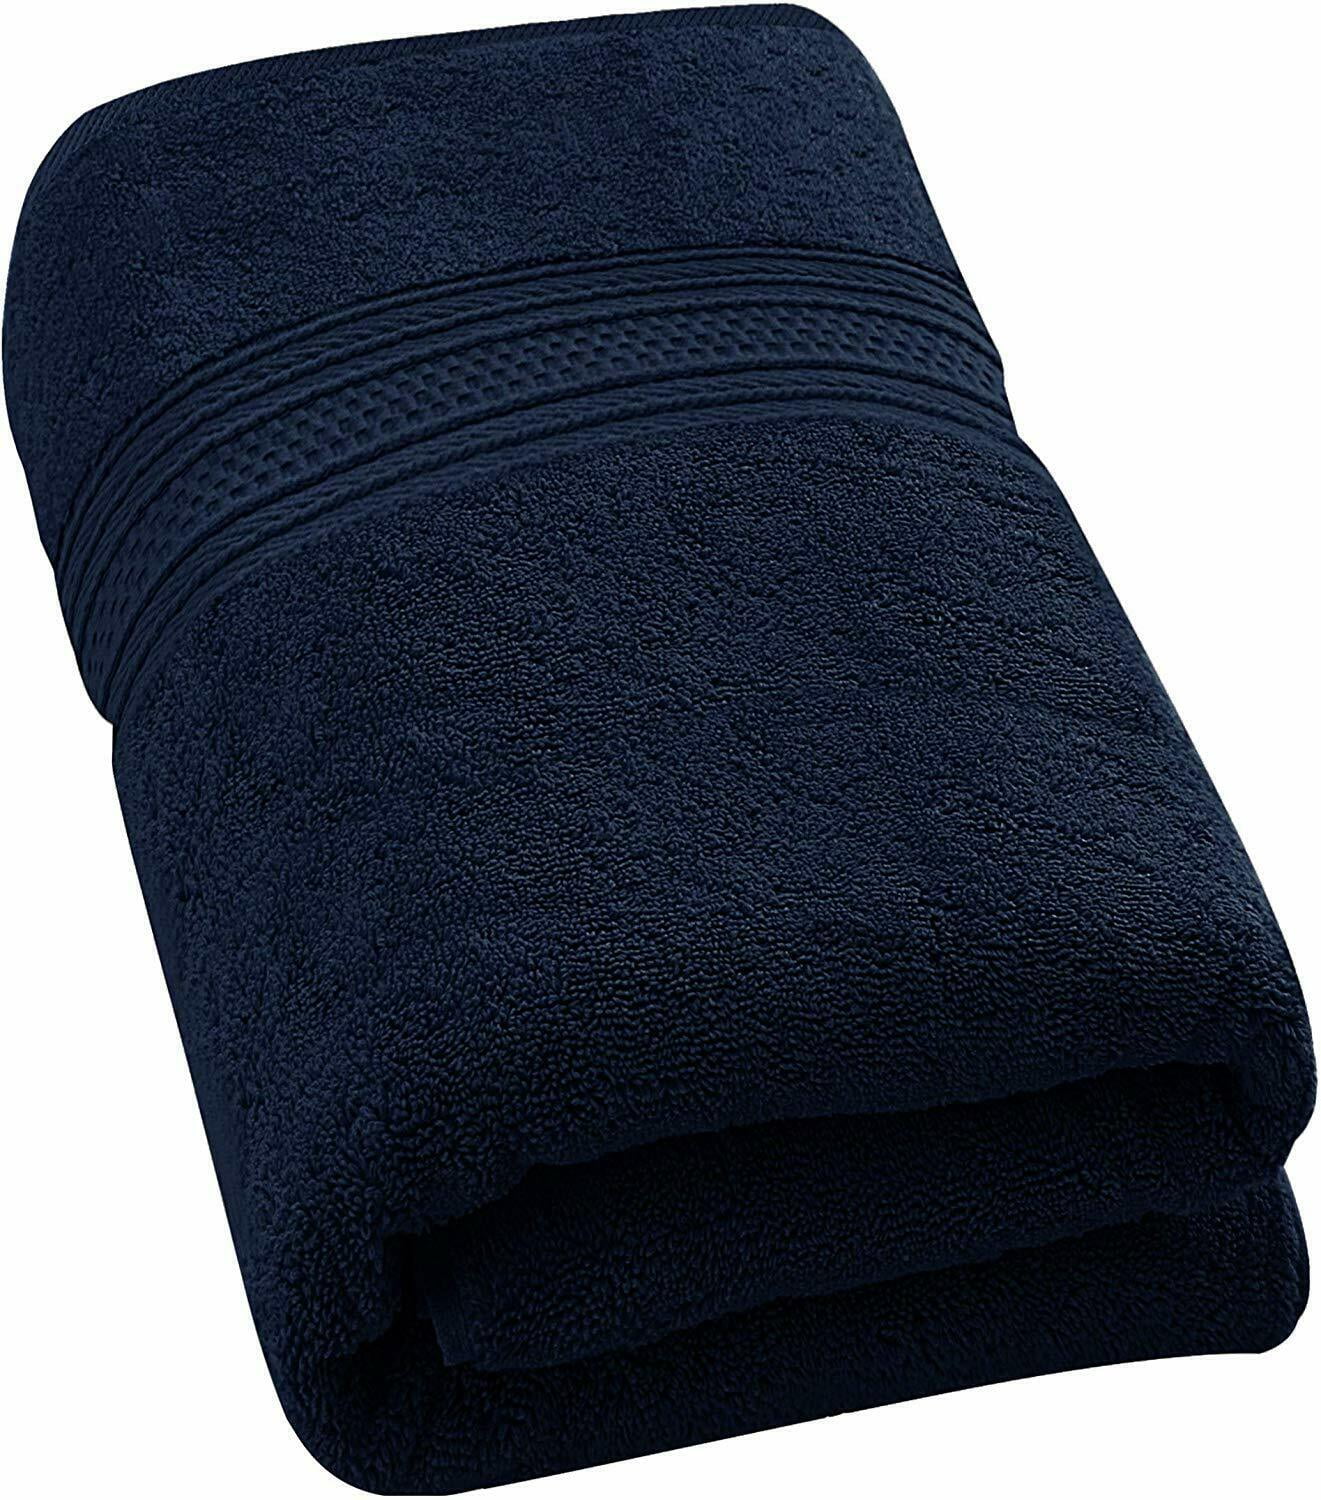 2 Pck Soft 100%Cotton Extra Large Bath Towel Oversized Bath Sheet Gray 35" x 70" 